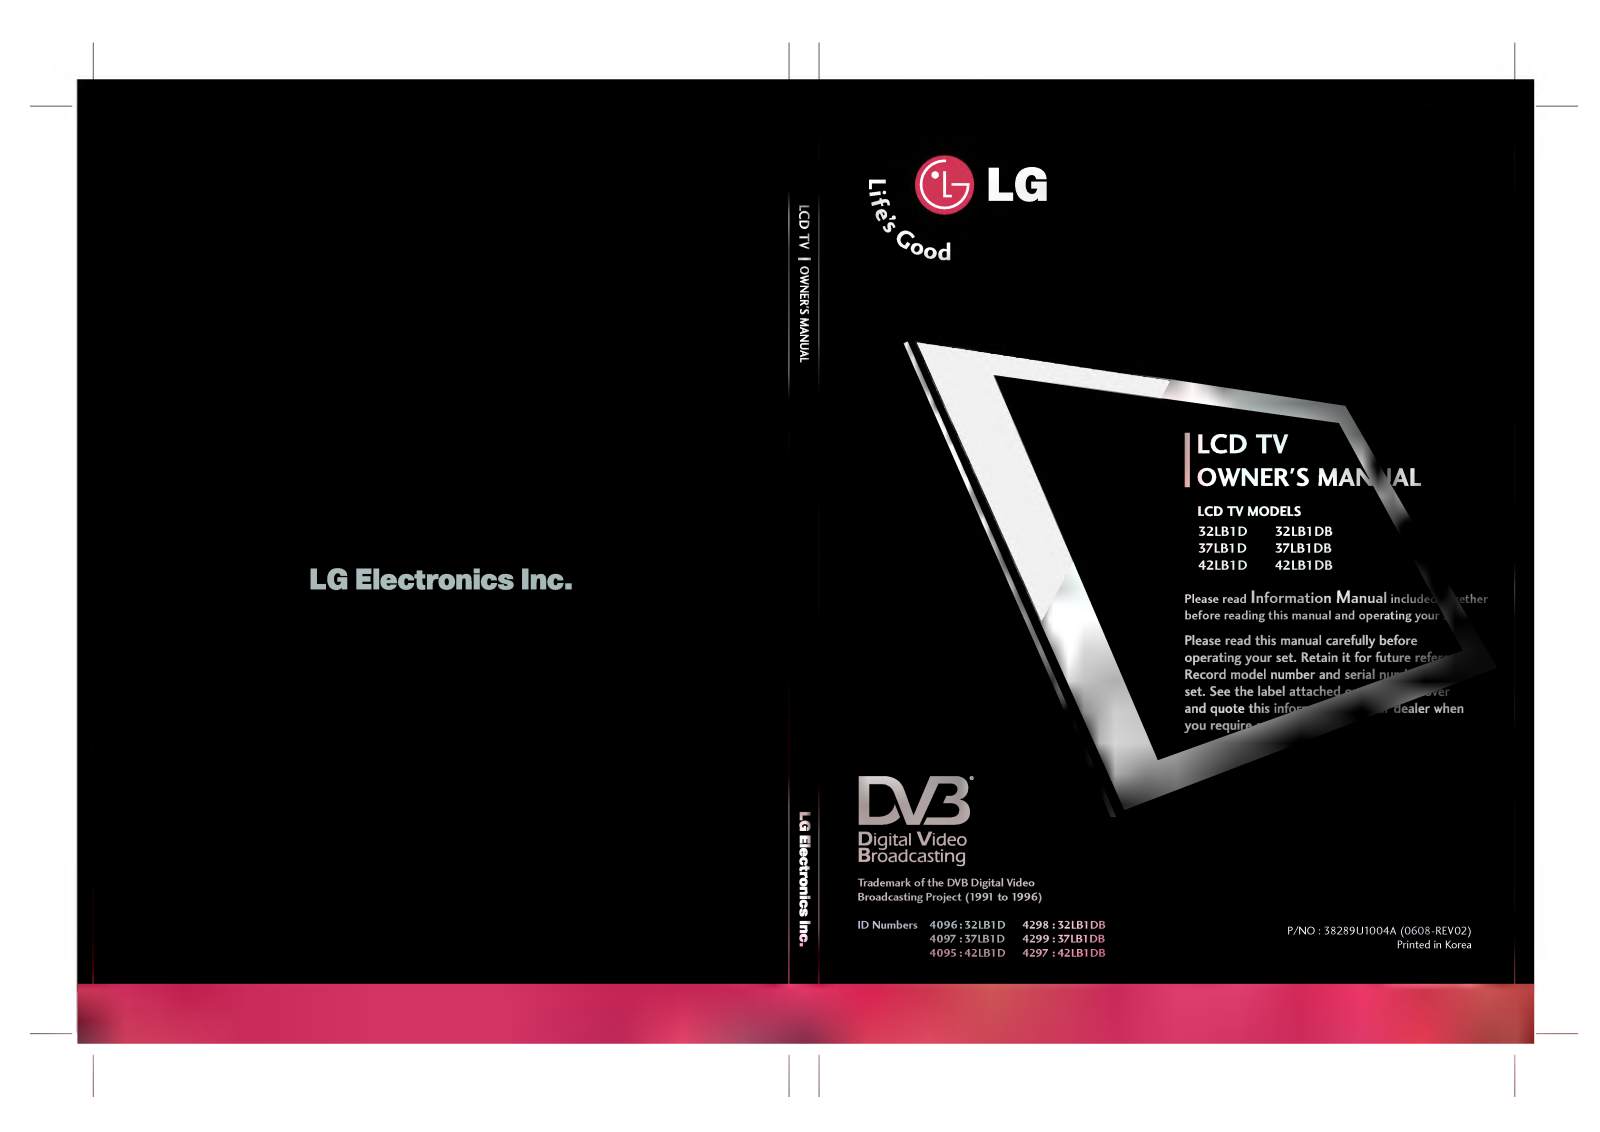 LG 42LB1DB Owner’s Manual